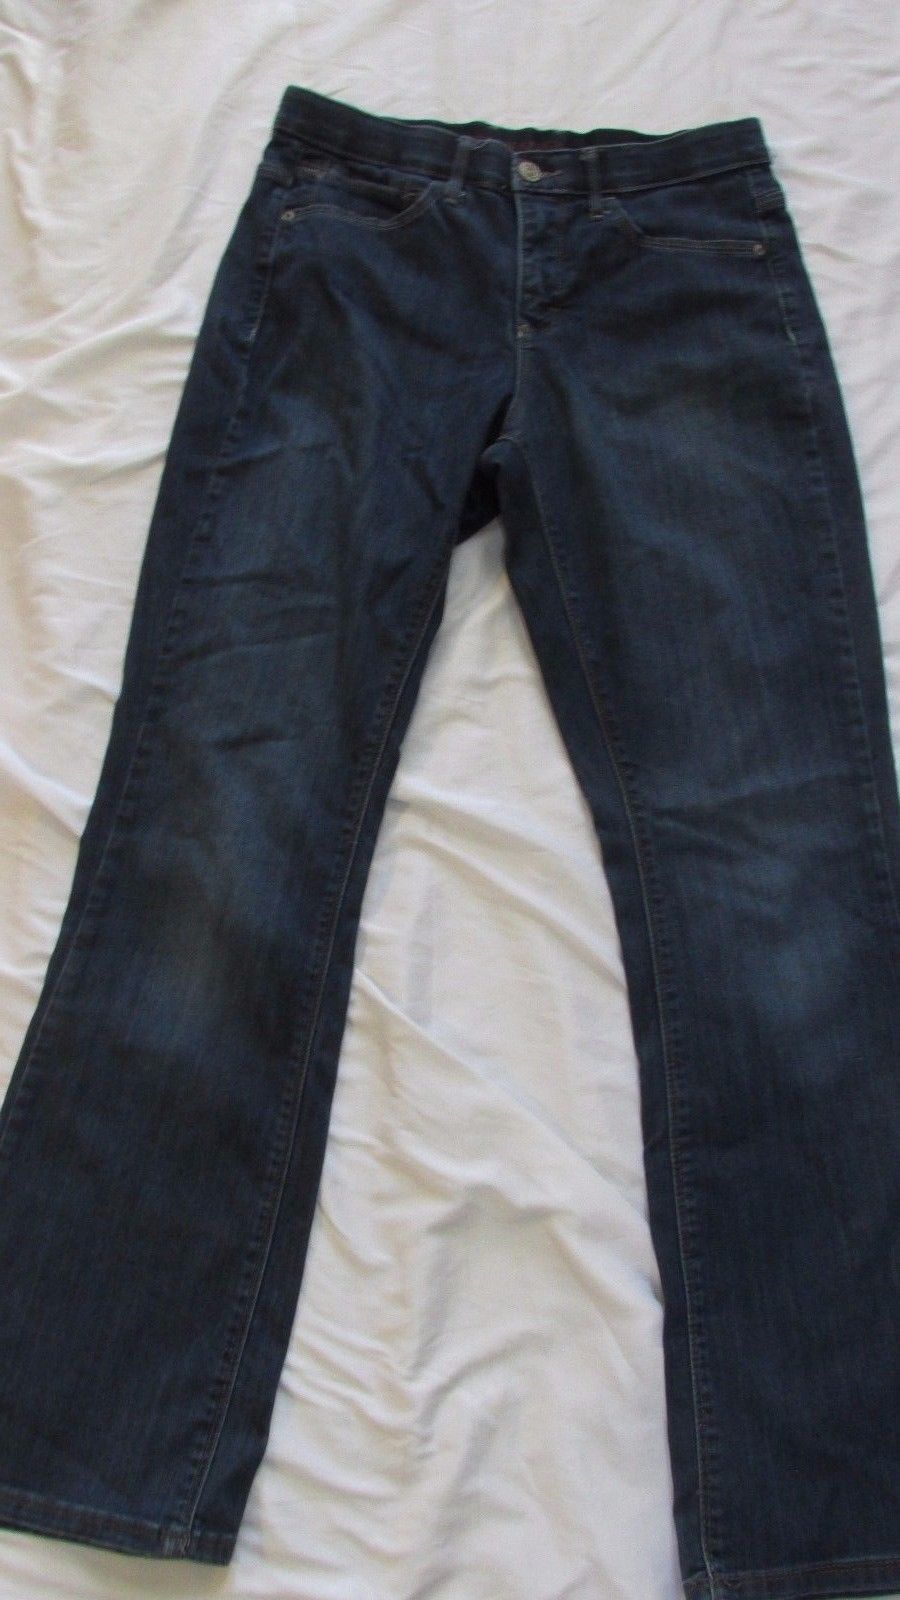 women's lee comfort stretch waistband jeans